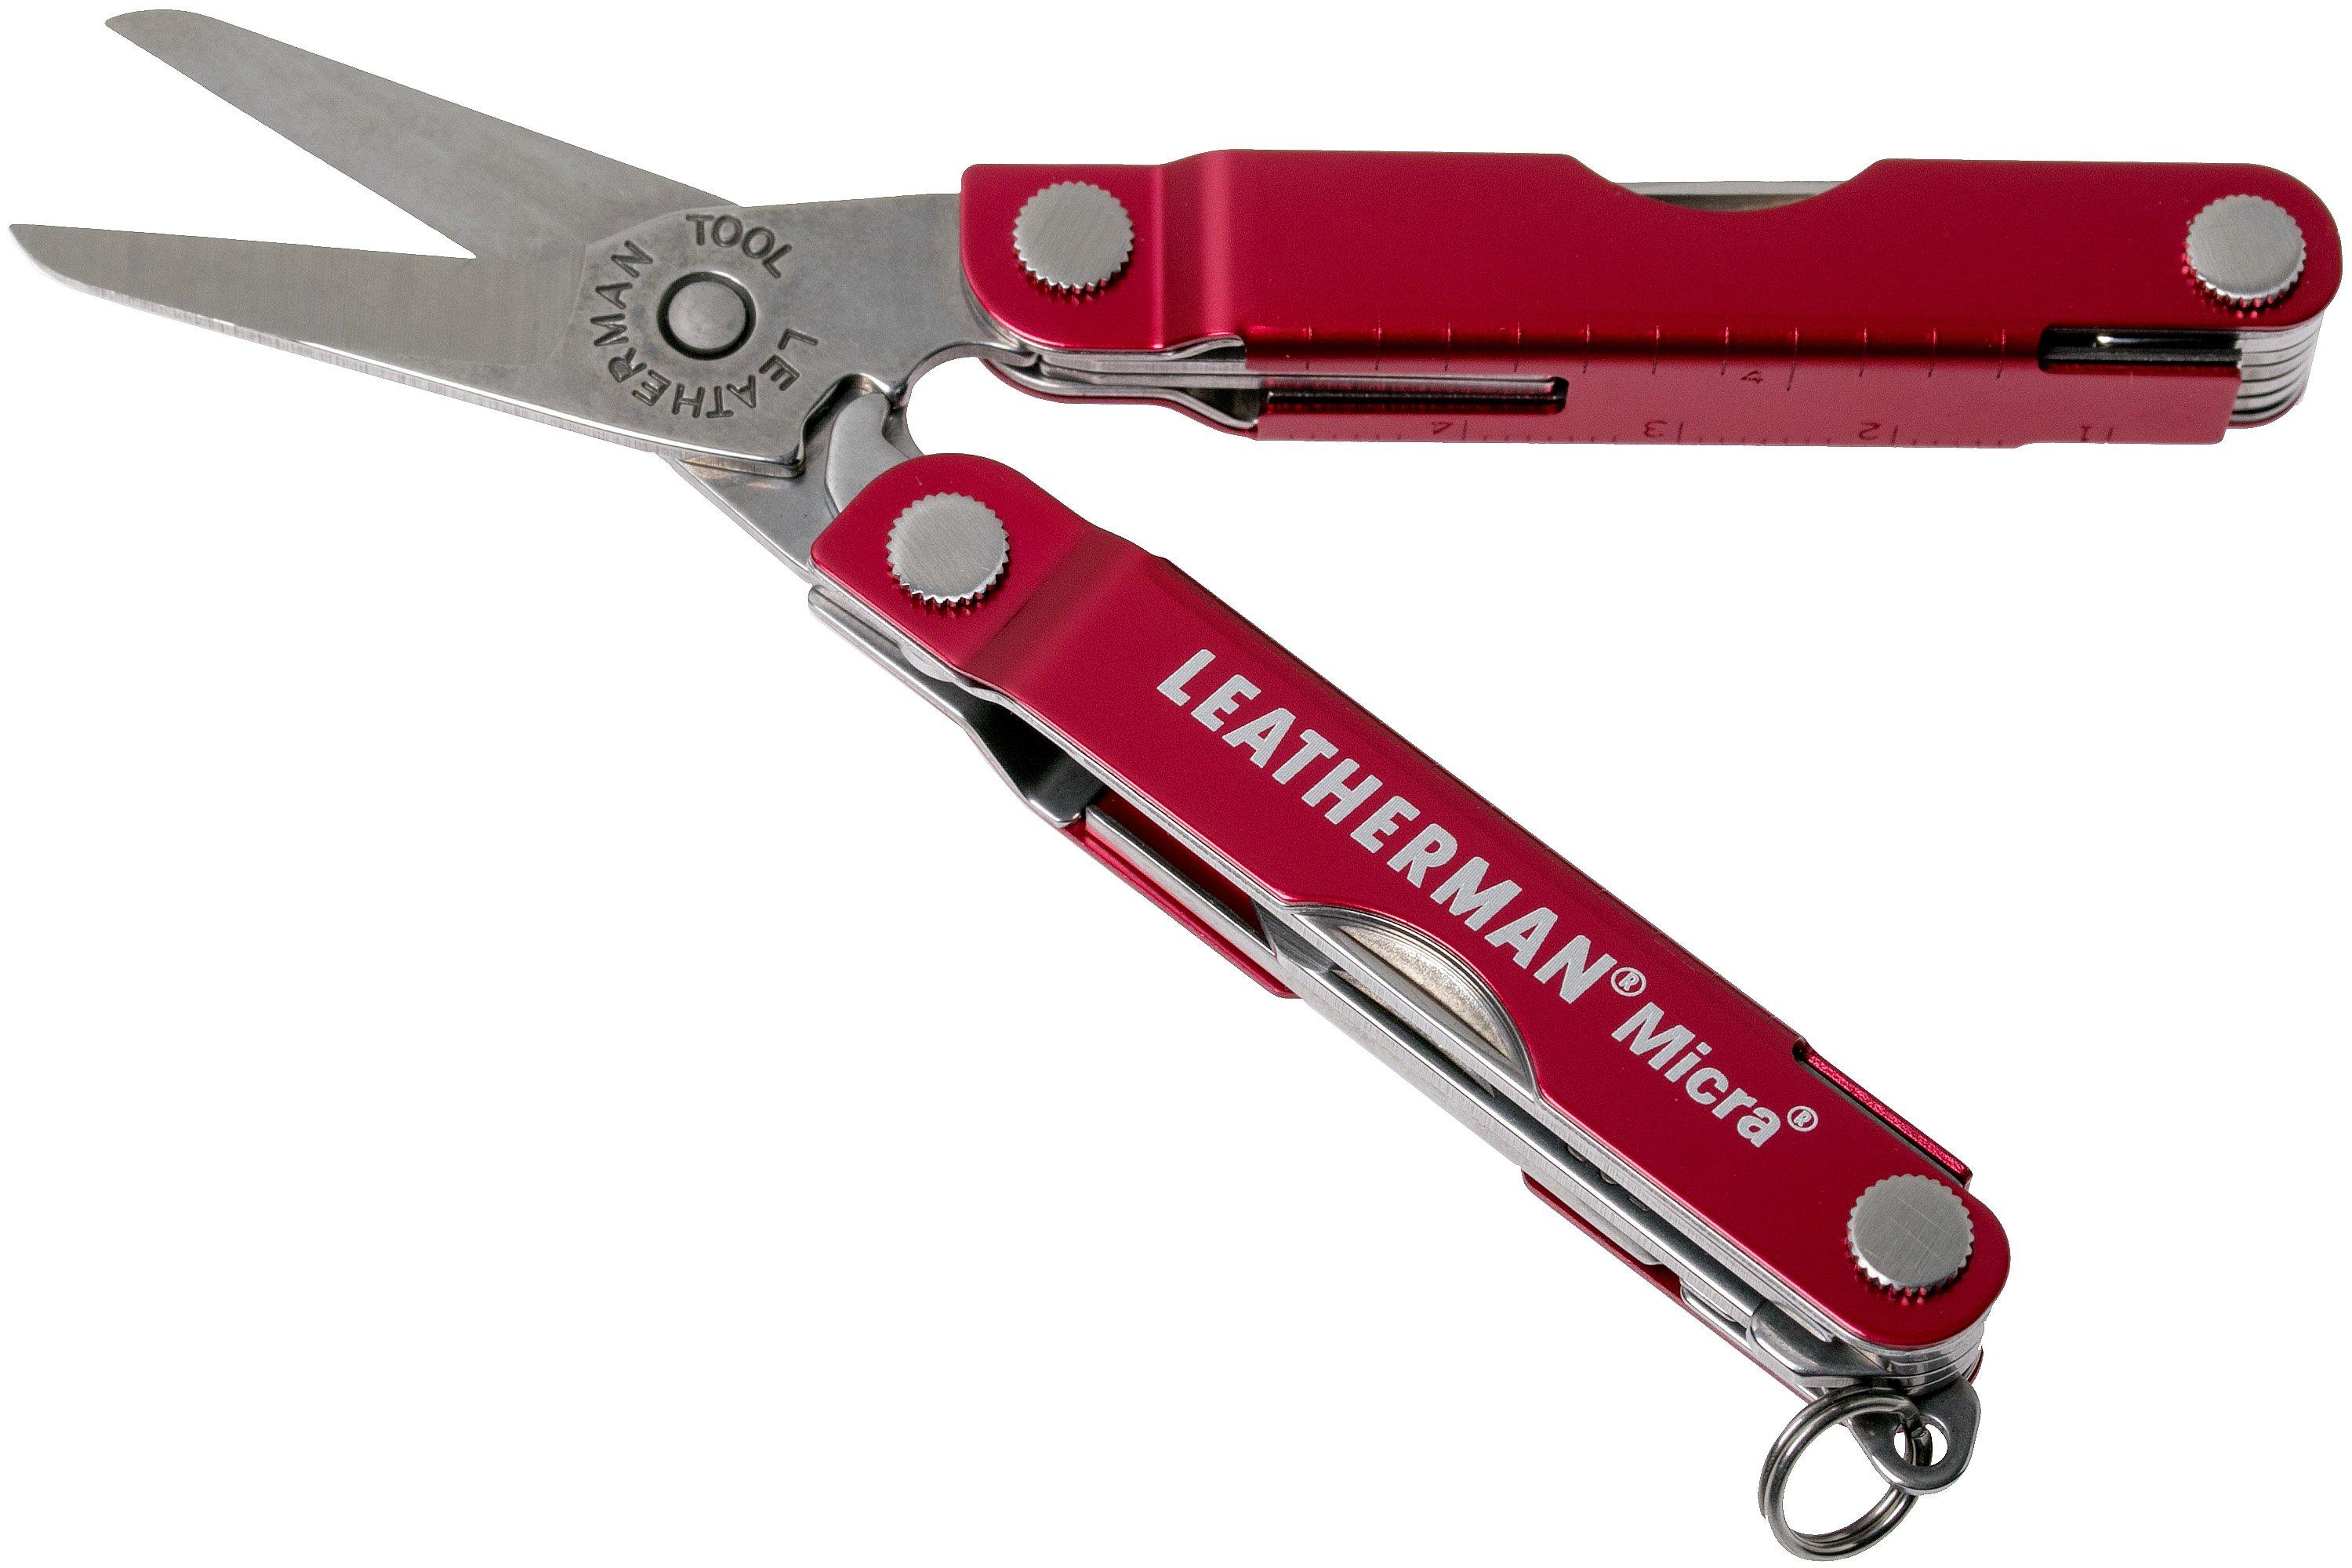 Leatherman Micra Red, keychain multi-tool